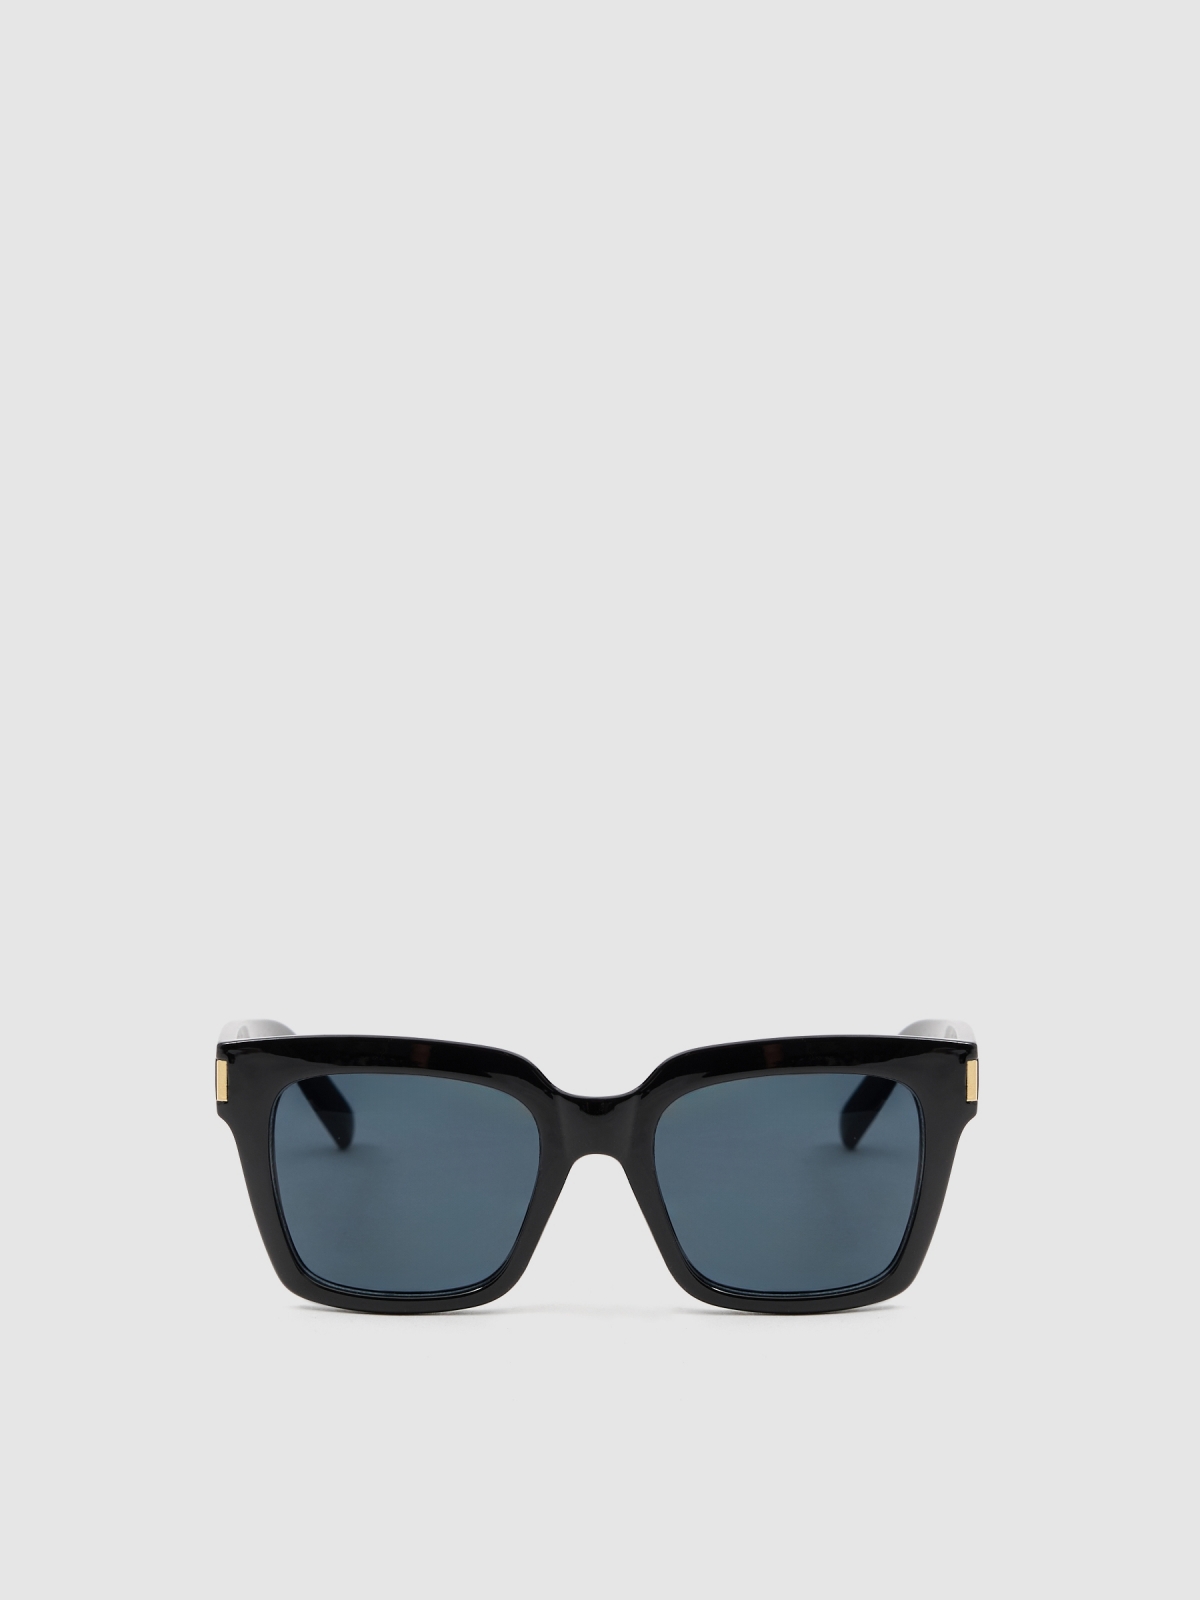 Square sunglasses black